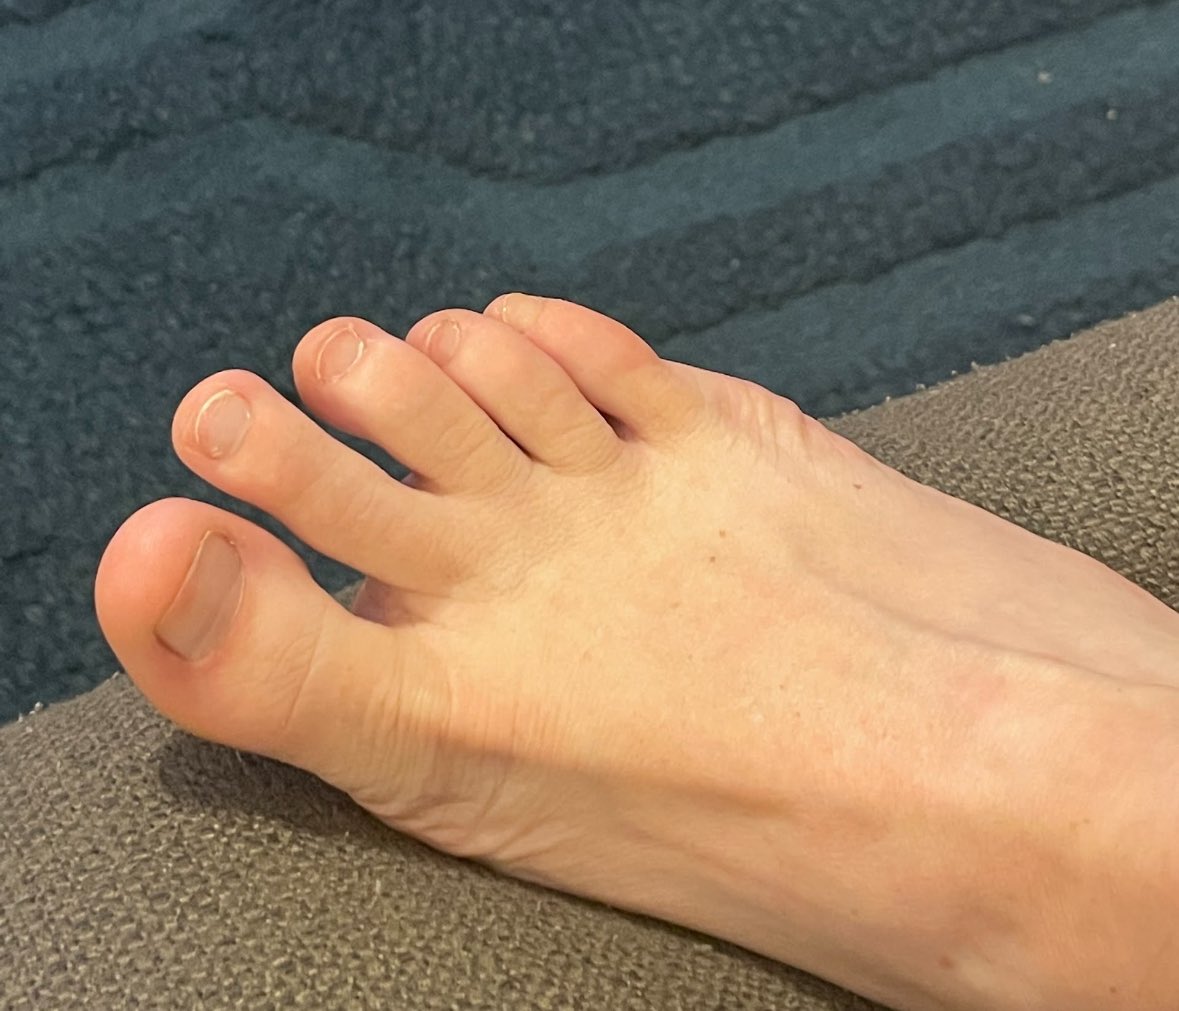 He took these sneaky pics! Now he must #suckmytoes 

#feet #Feet #feetcare #feetstagram #feetup #feetworshi̇p #socksaddict #socksaddiction #solelicker #toe #dirtyfeet @rt_feet @RT_footfetish @VIPFeetOnly